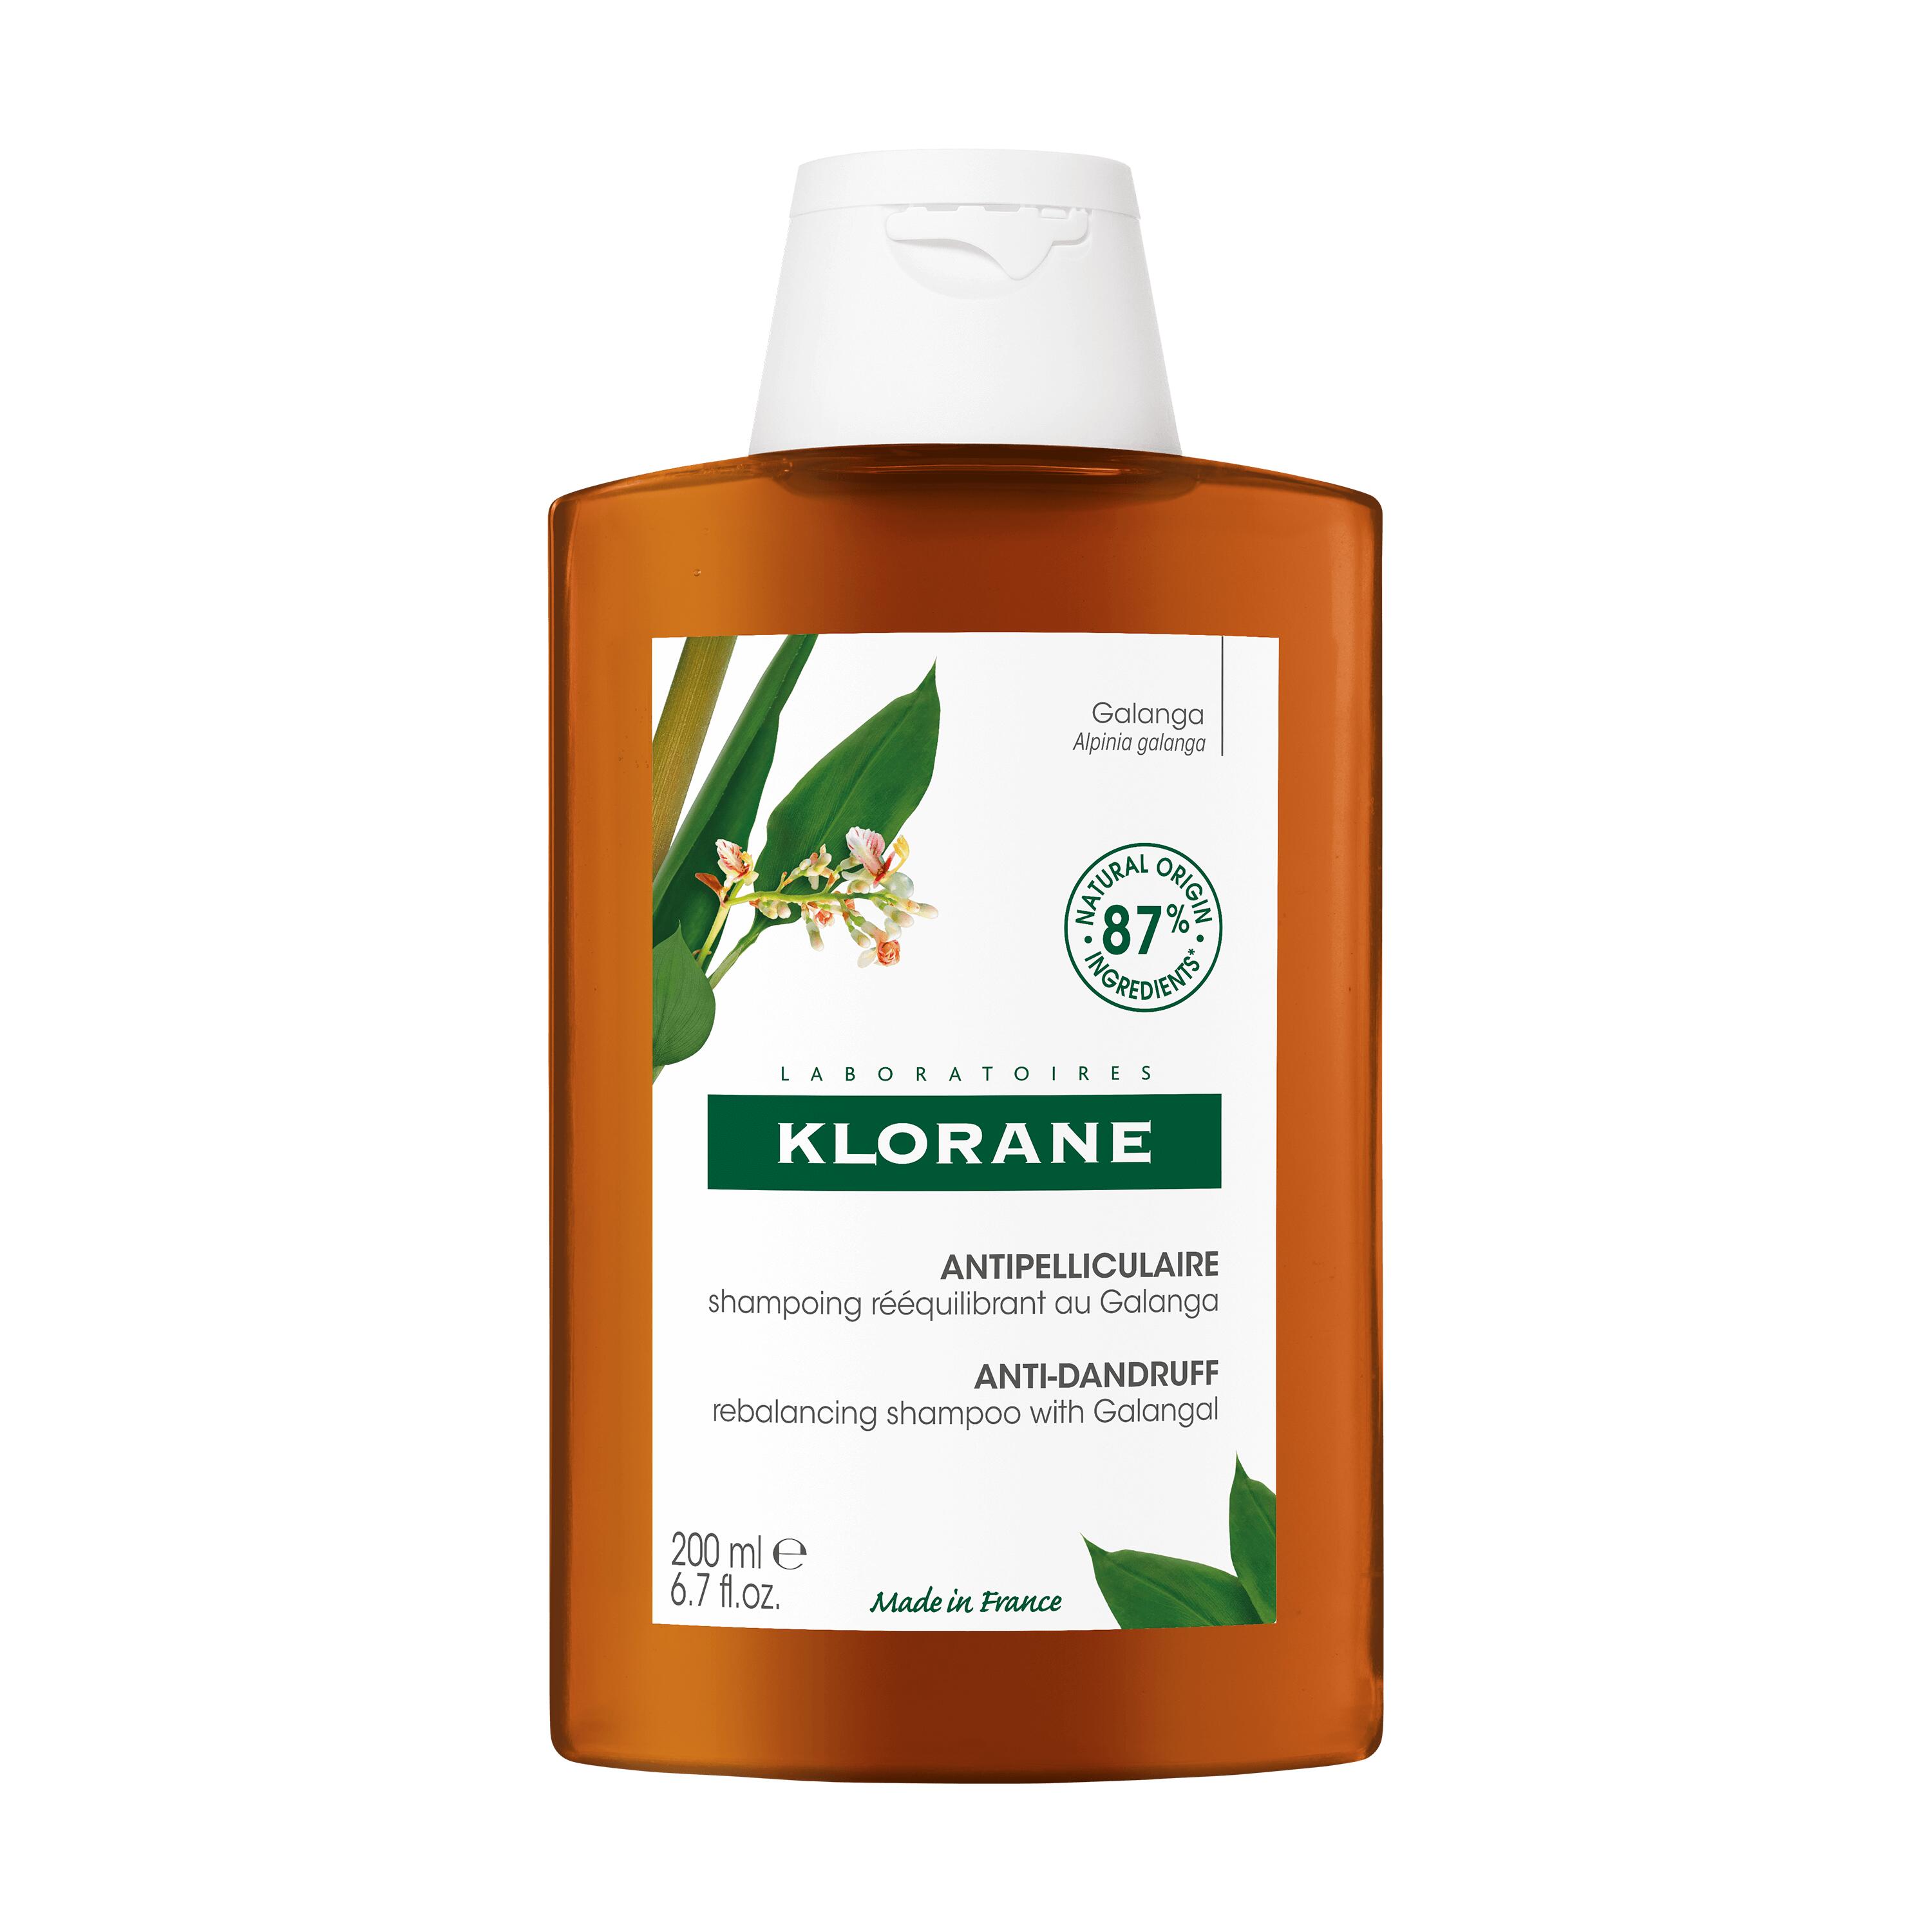 klorane shampoo antiforfora riequilibrante galanga 200ml